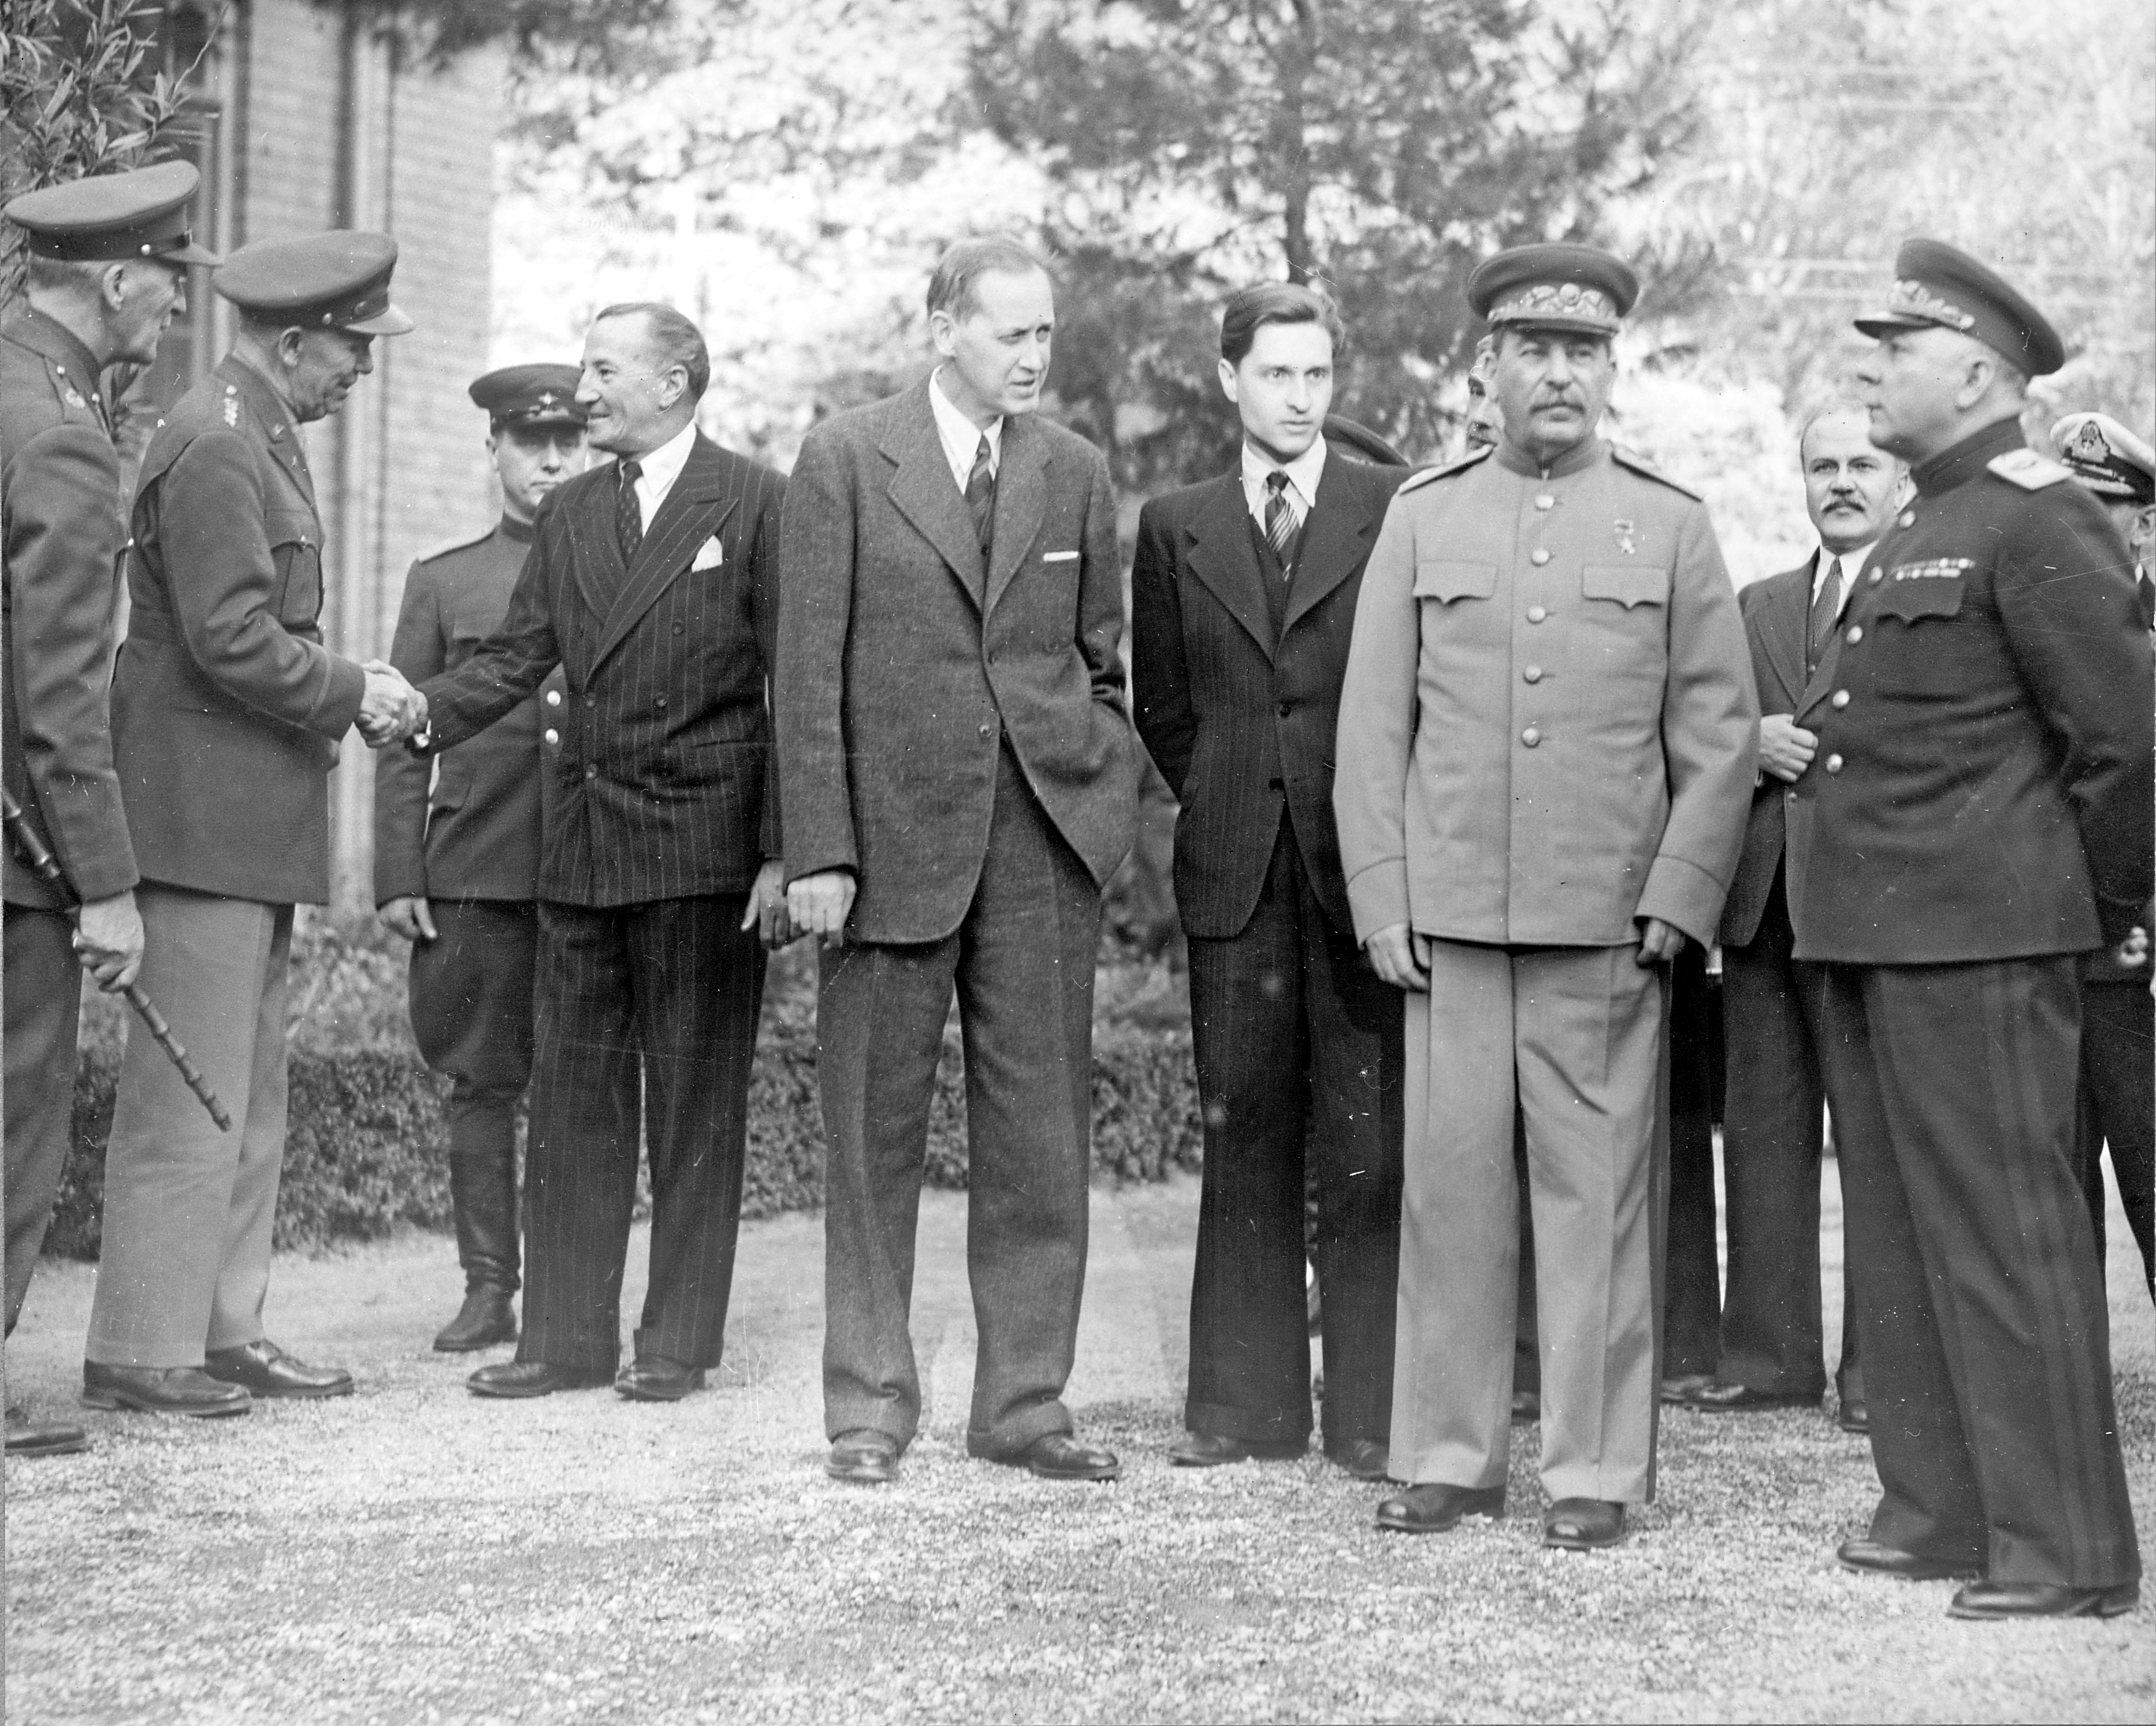 Marshall, Keer, Hopkins, Stalin, Molotov, Voroshilov, and others, Tehran, Iran, Dec 1943